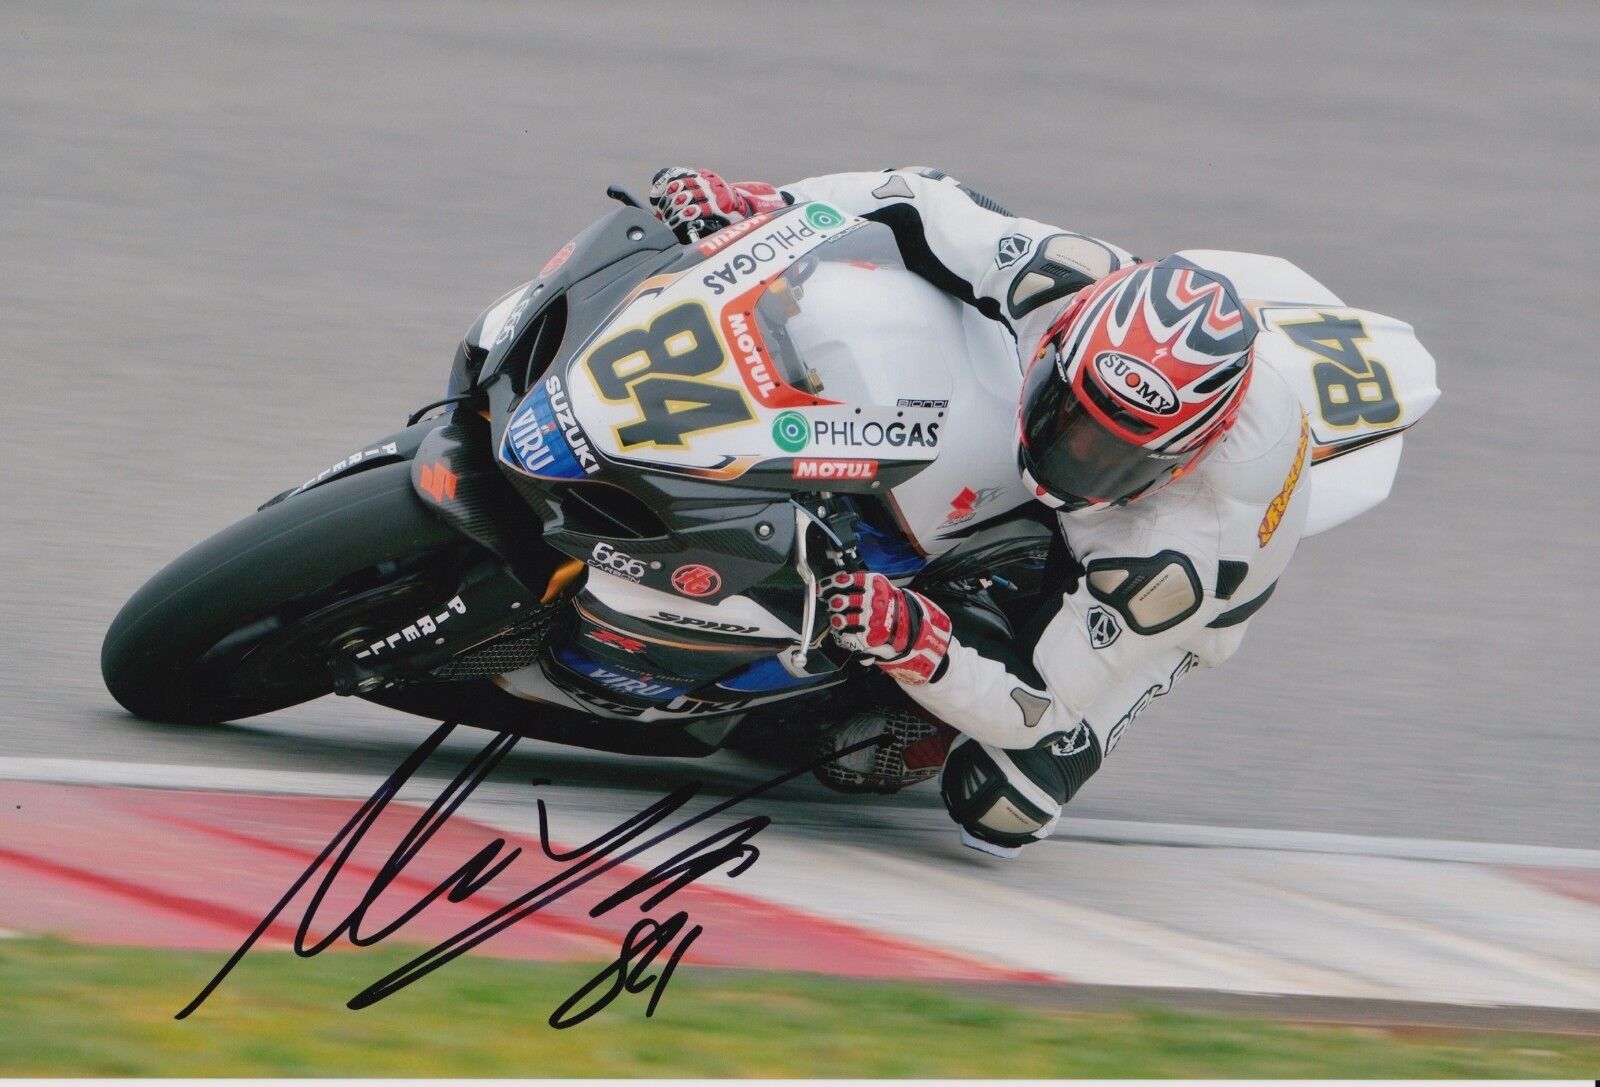 Michel Fabrizio Hand Signed 12x8 Photo Poster painting WSBK - Superbikes.